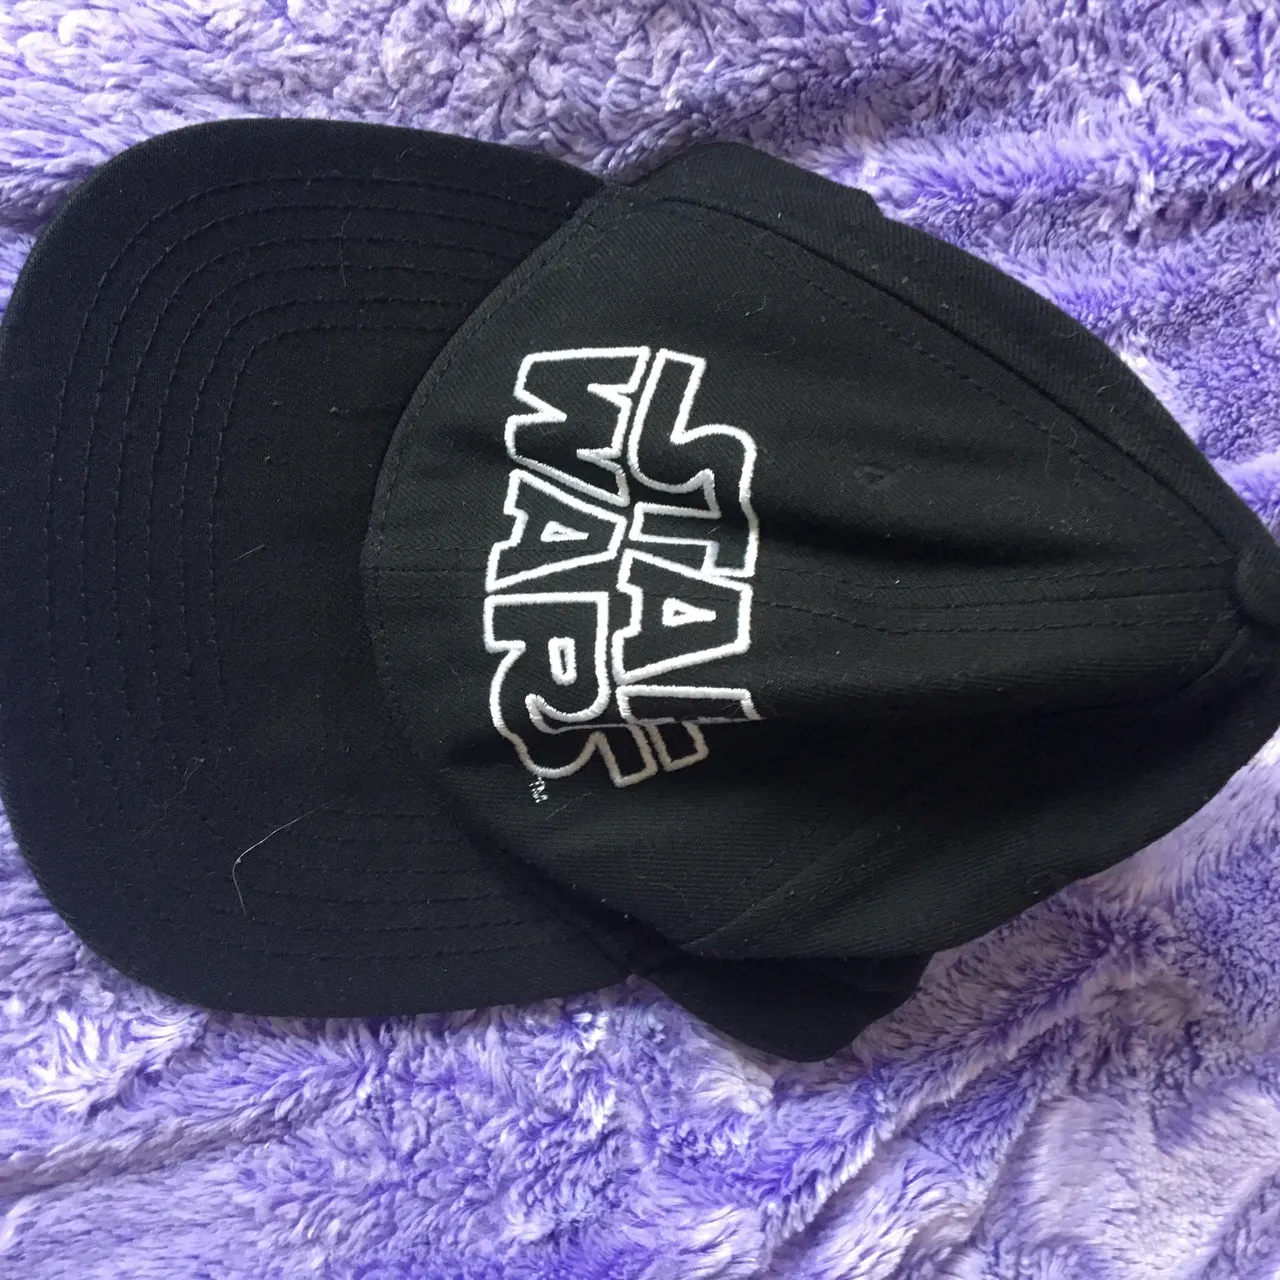 Star Wars baseball cap hat #clothes photo 1